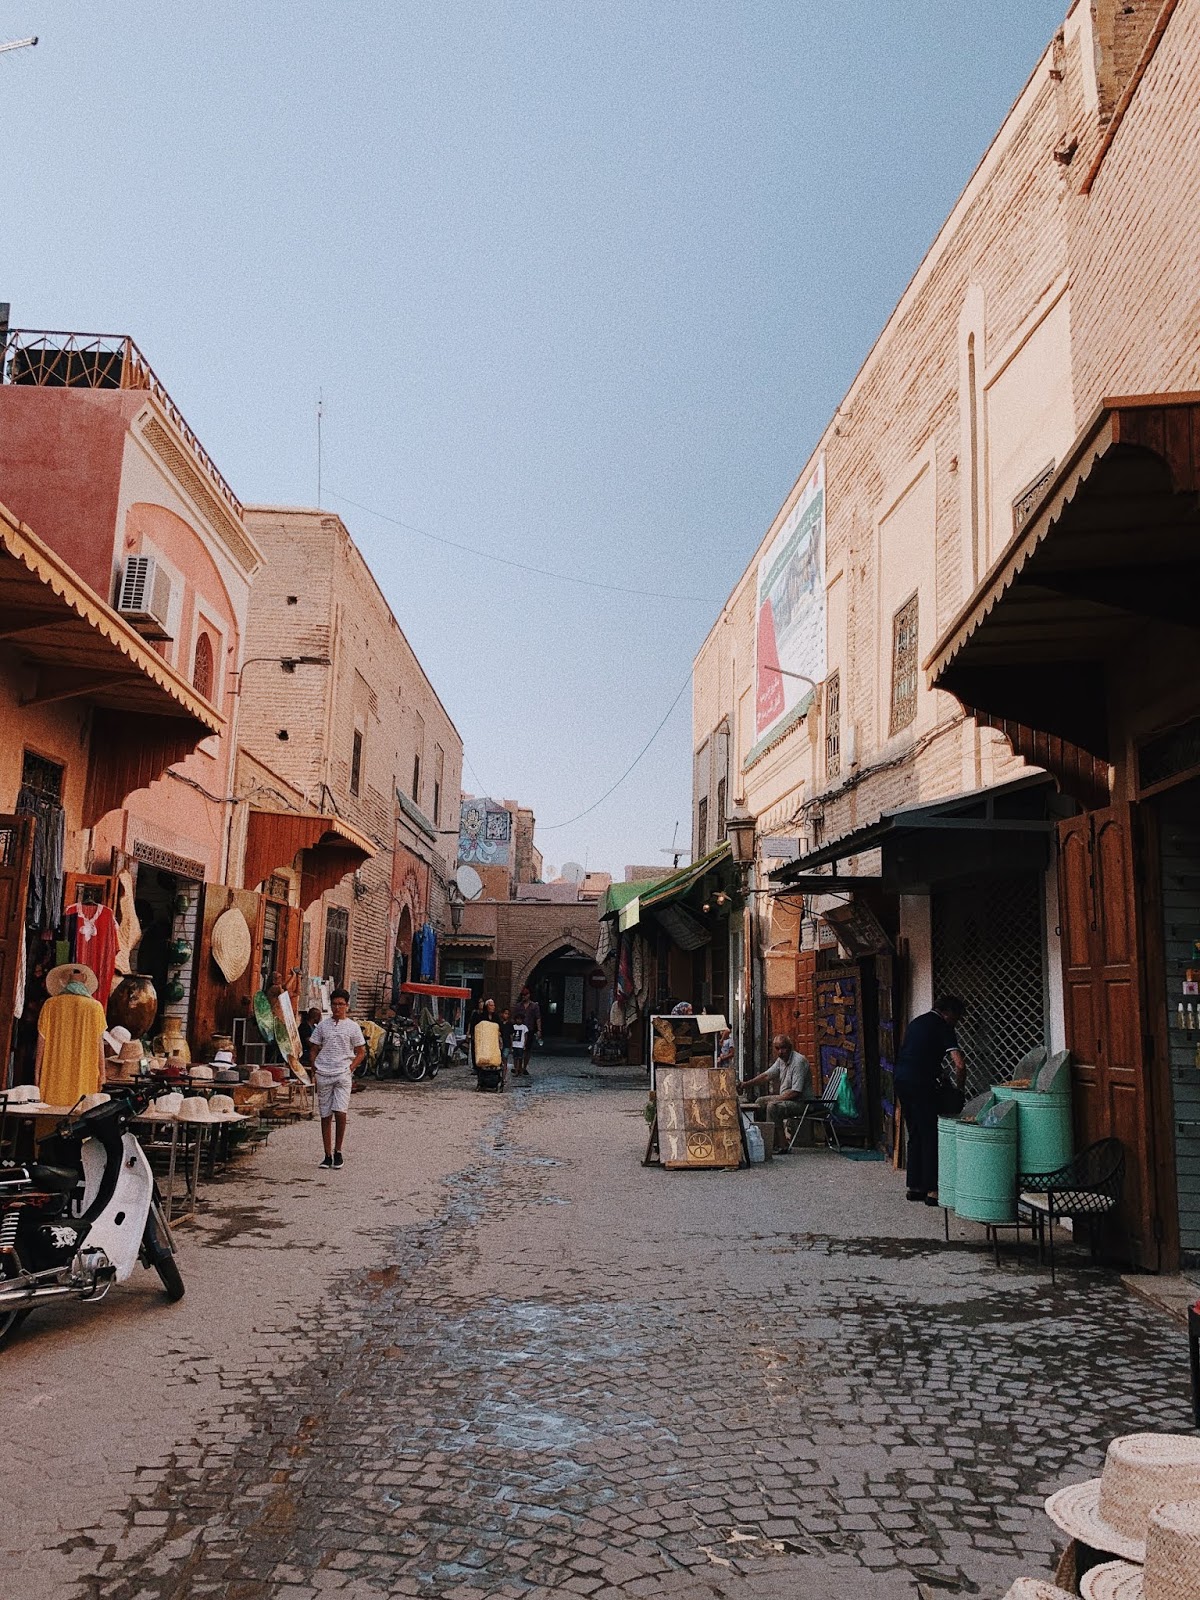 Travel Diary: Marrakech